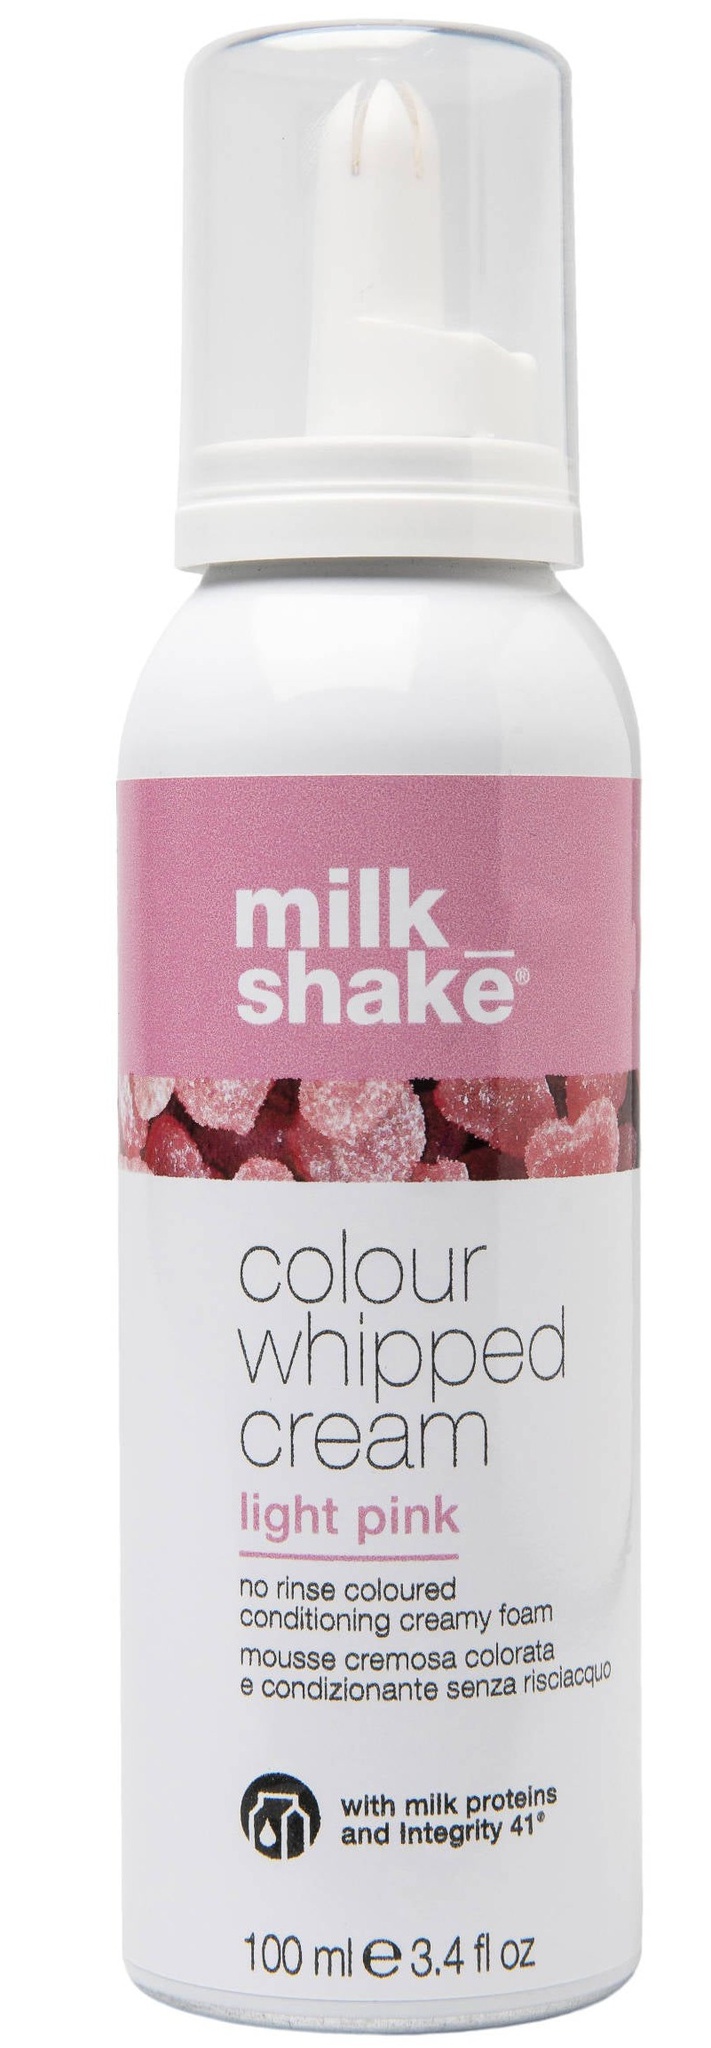 Milk shake Colour Whipped Cream Light Pink